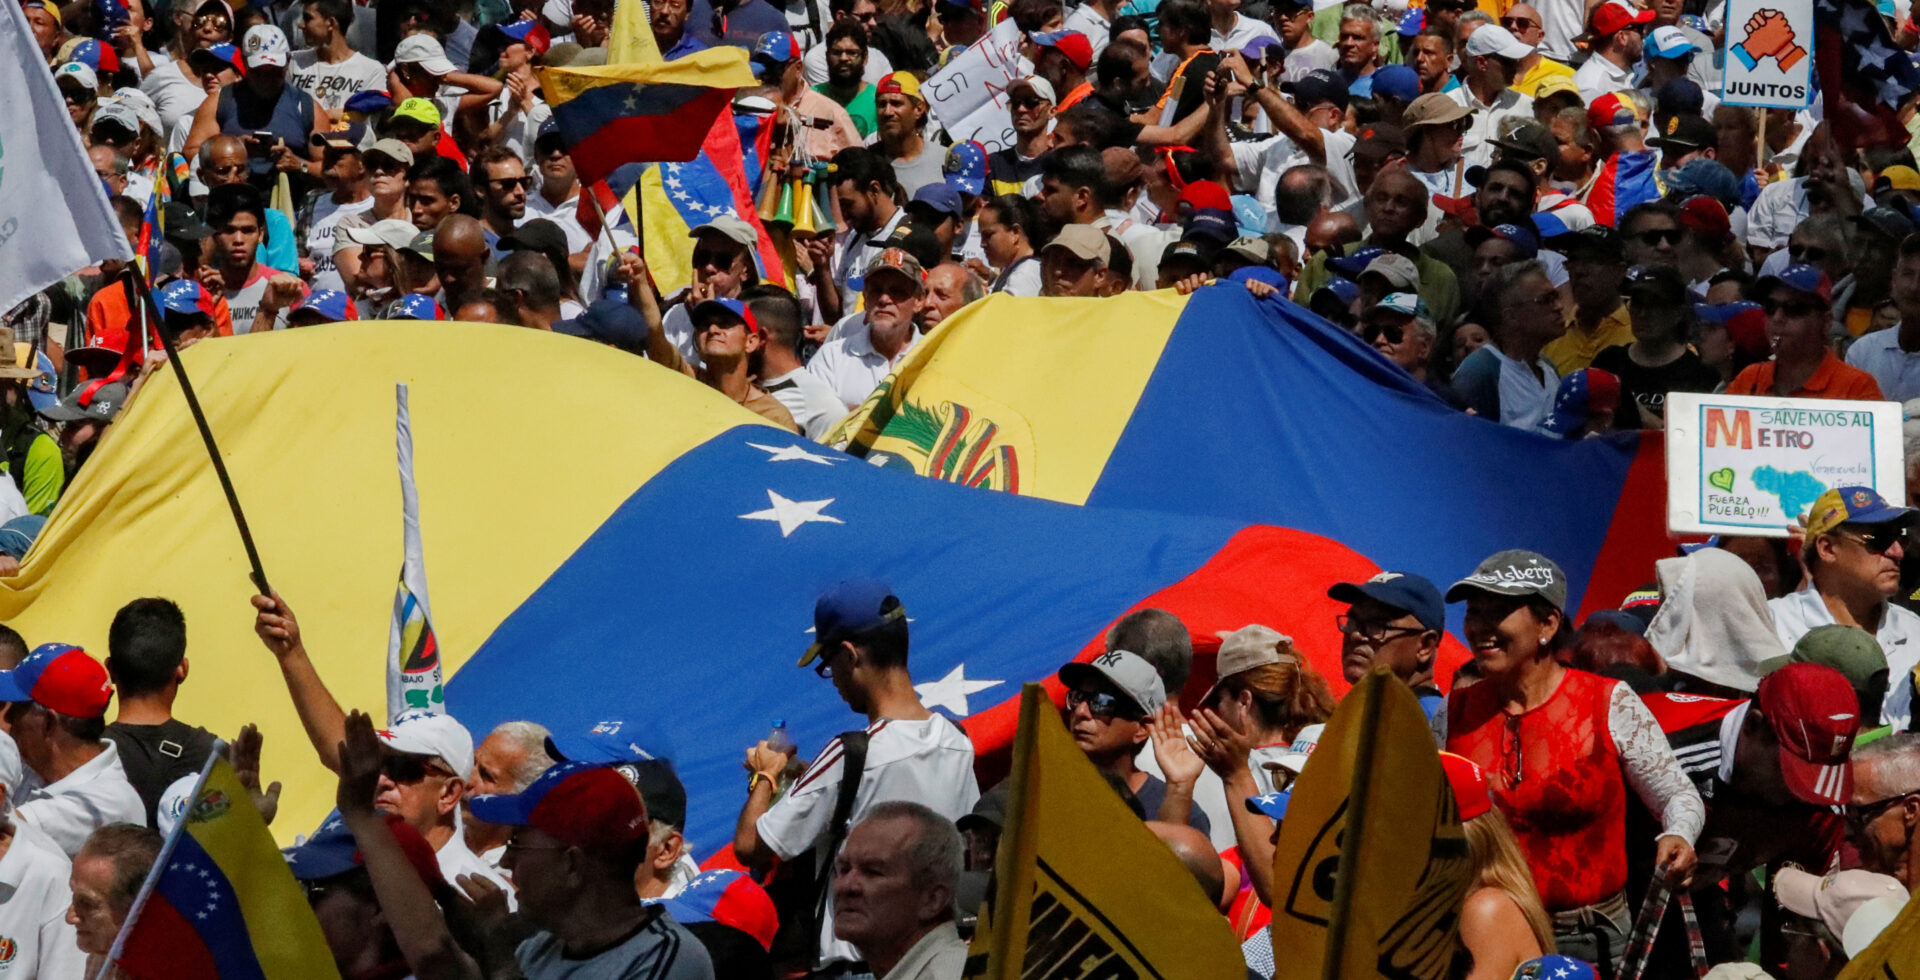 People take part in a protest march against Venezuela's President Nicolas Maduro in Caracas, Venezuela